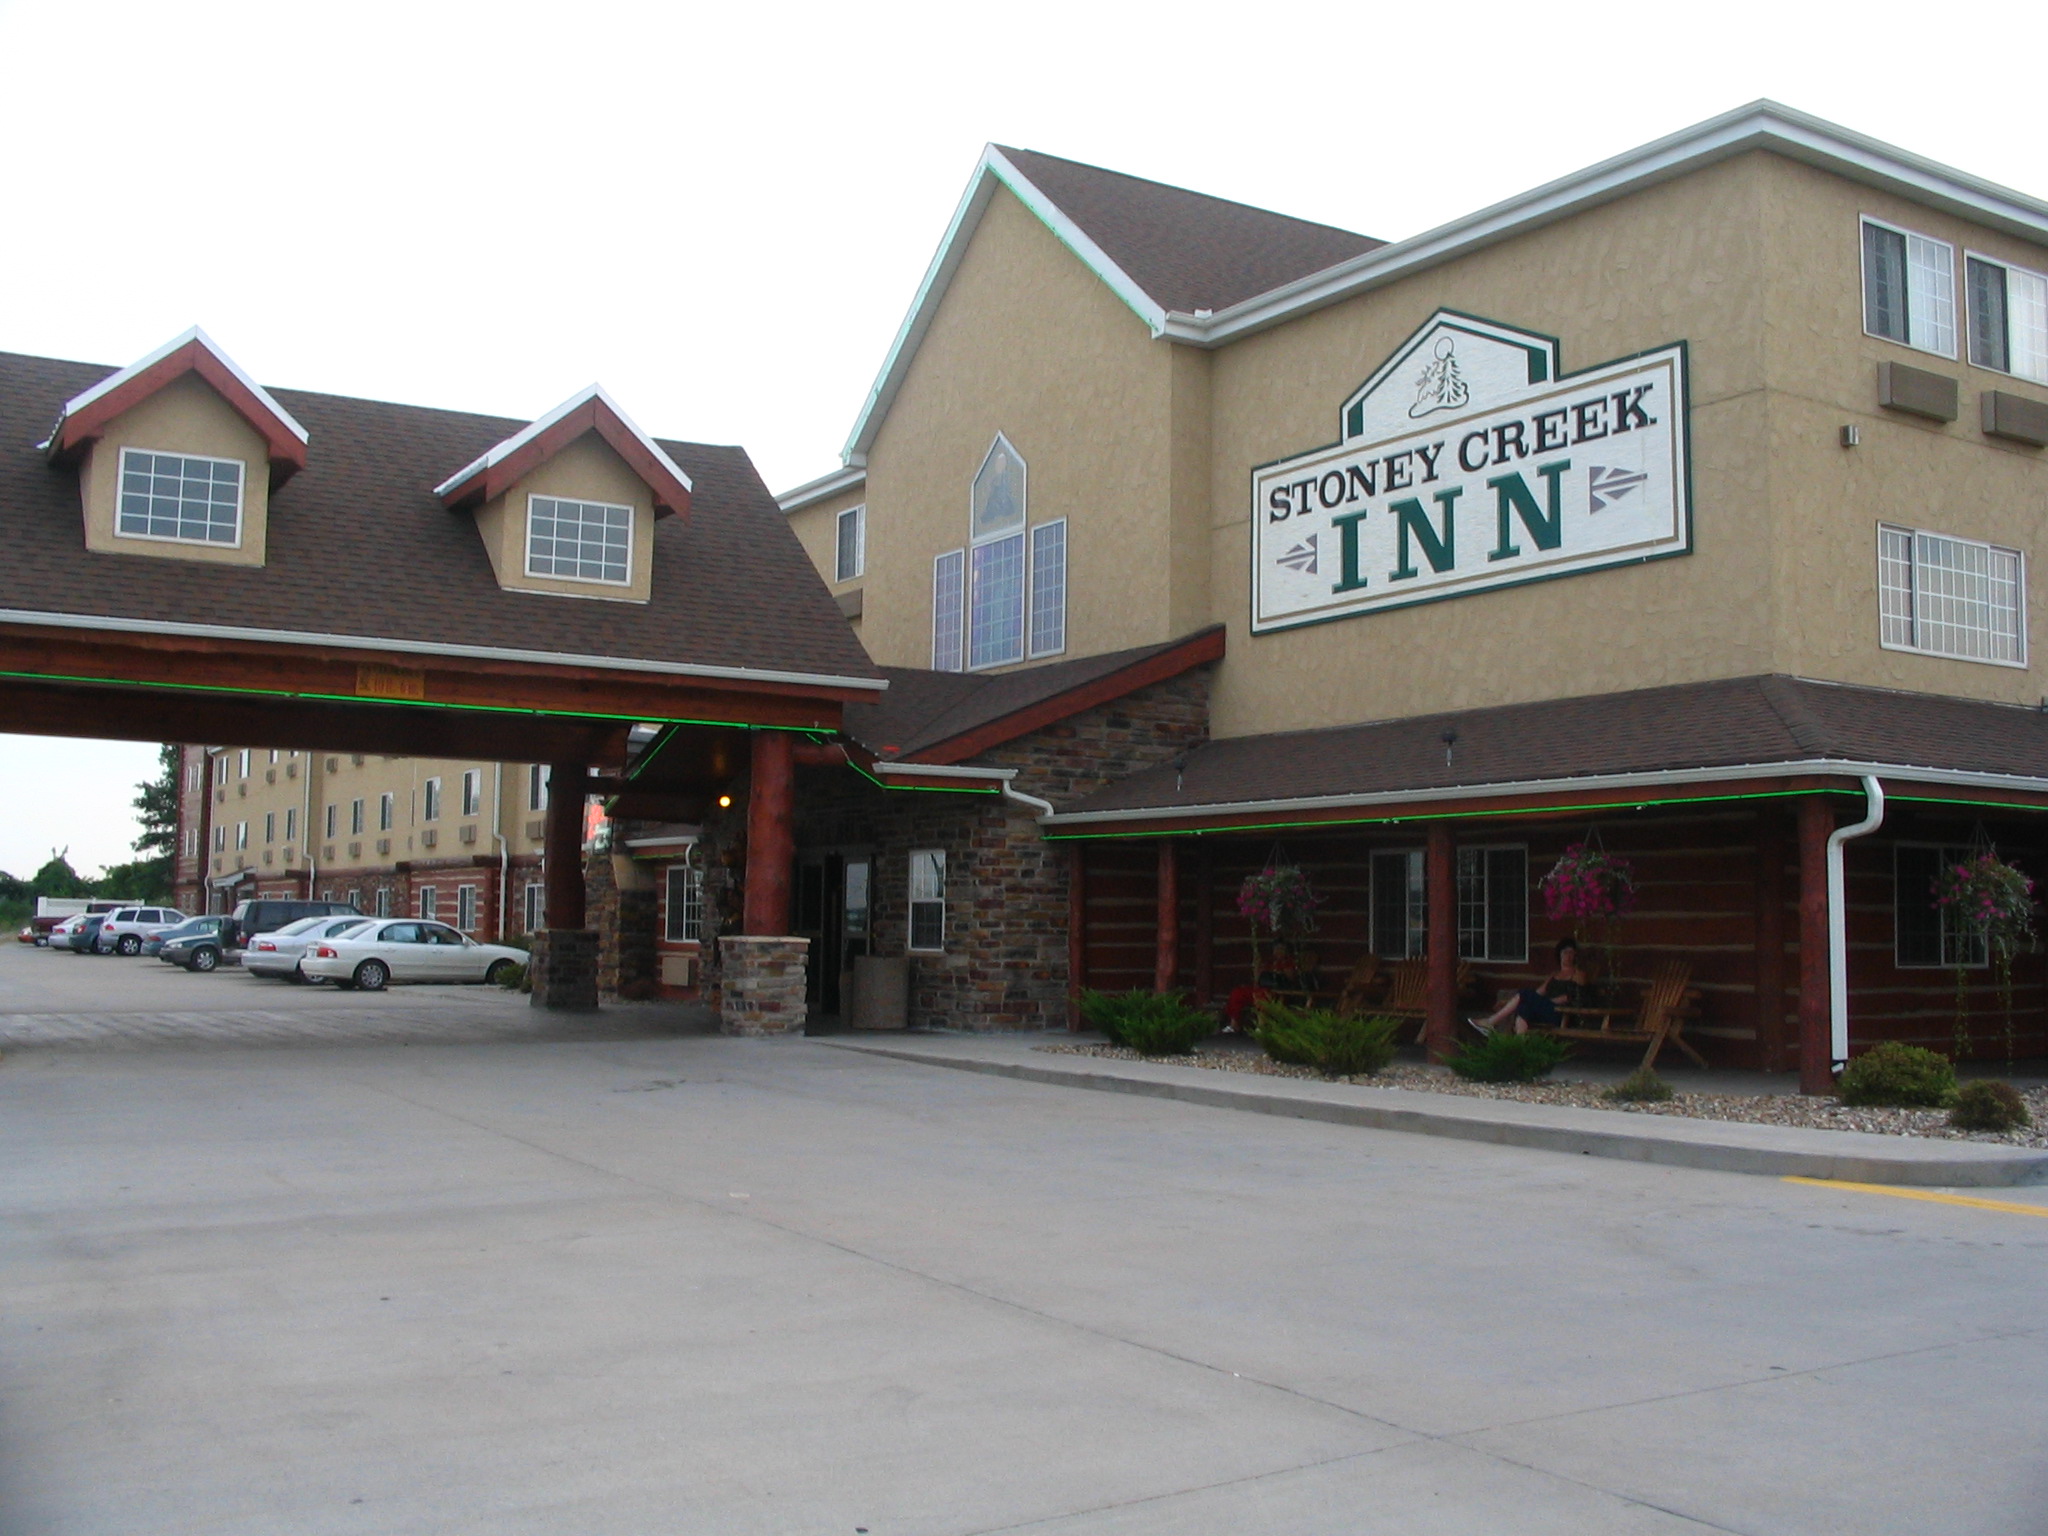 Stoney Creek Inn, our reunion headquarters